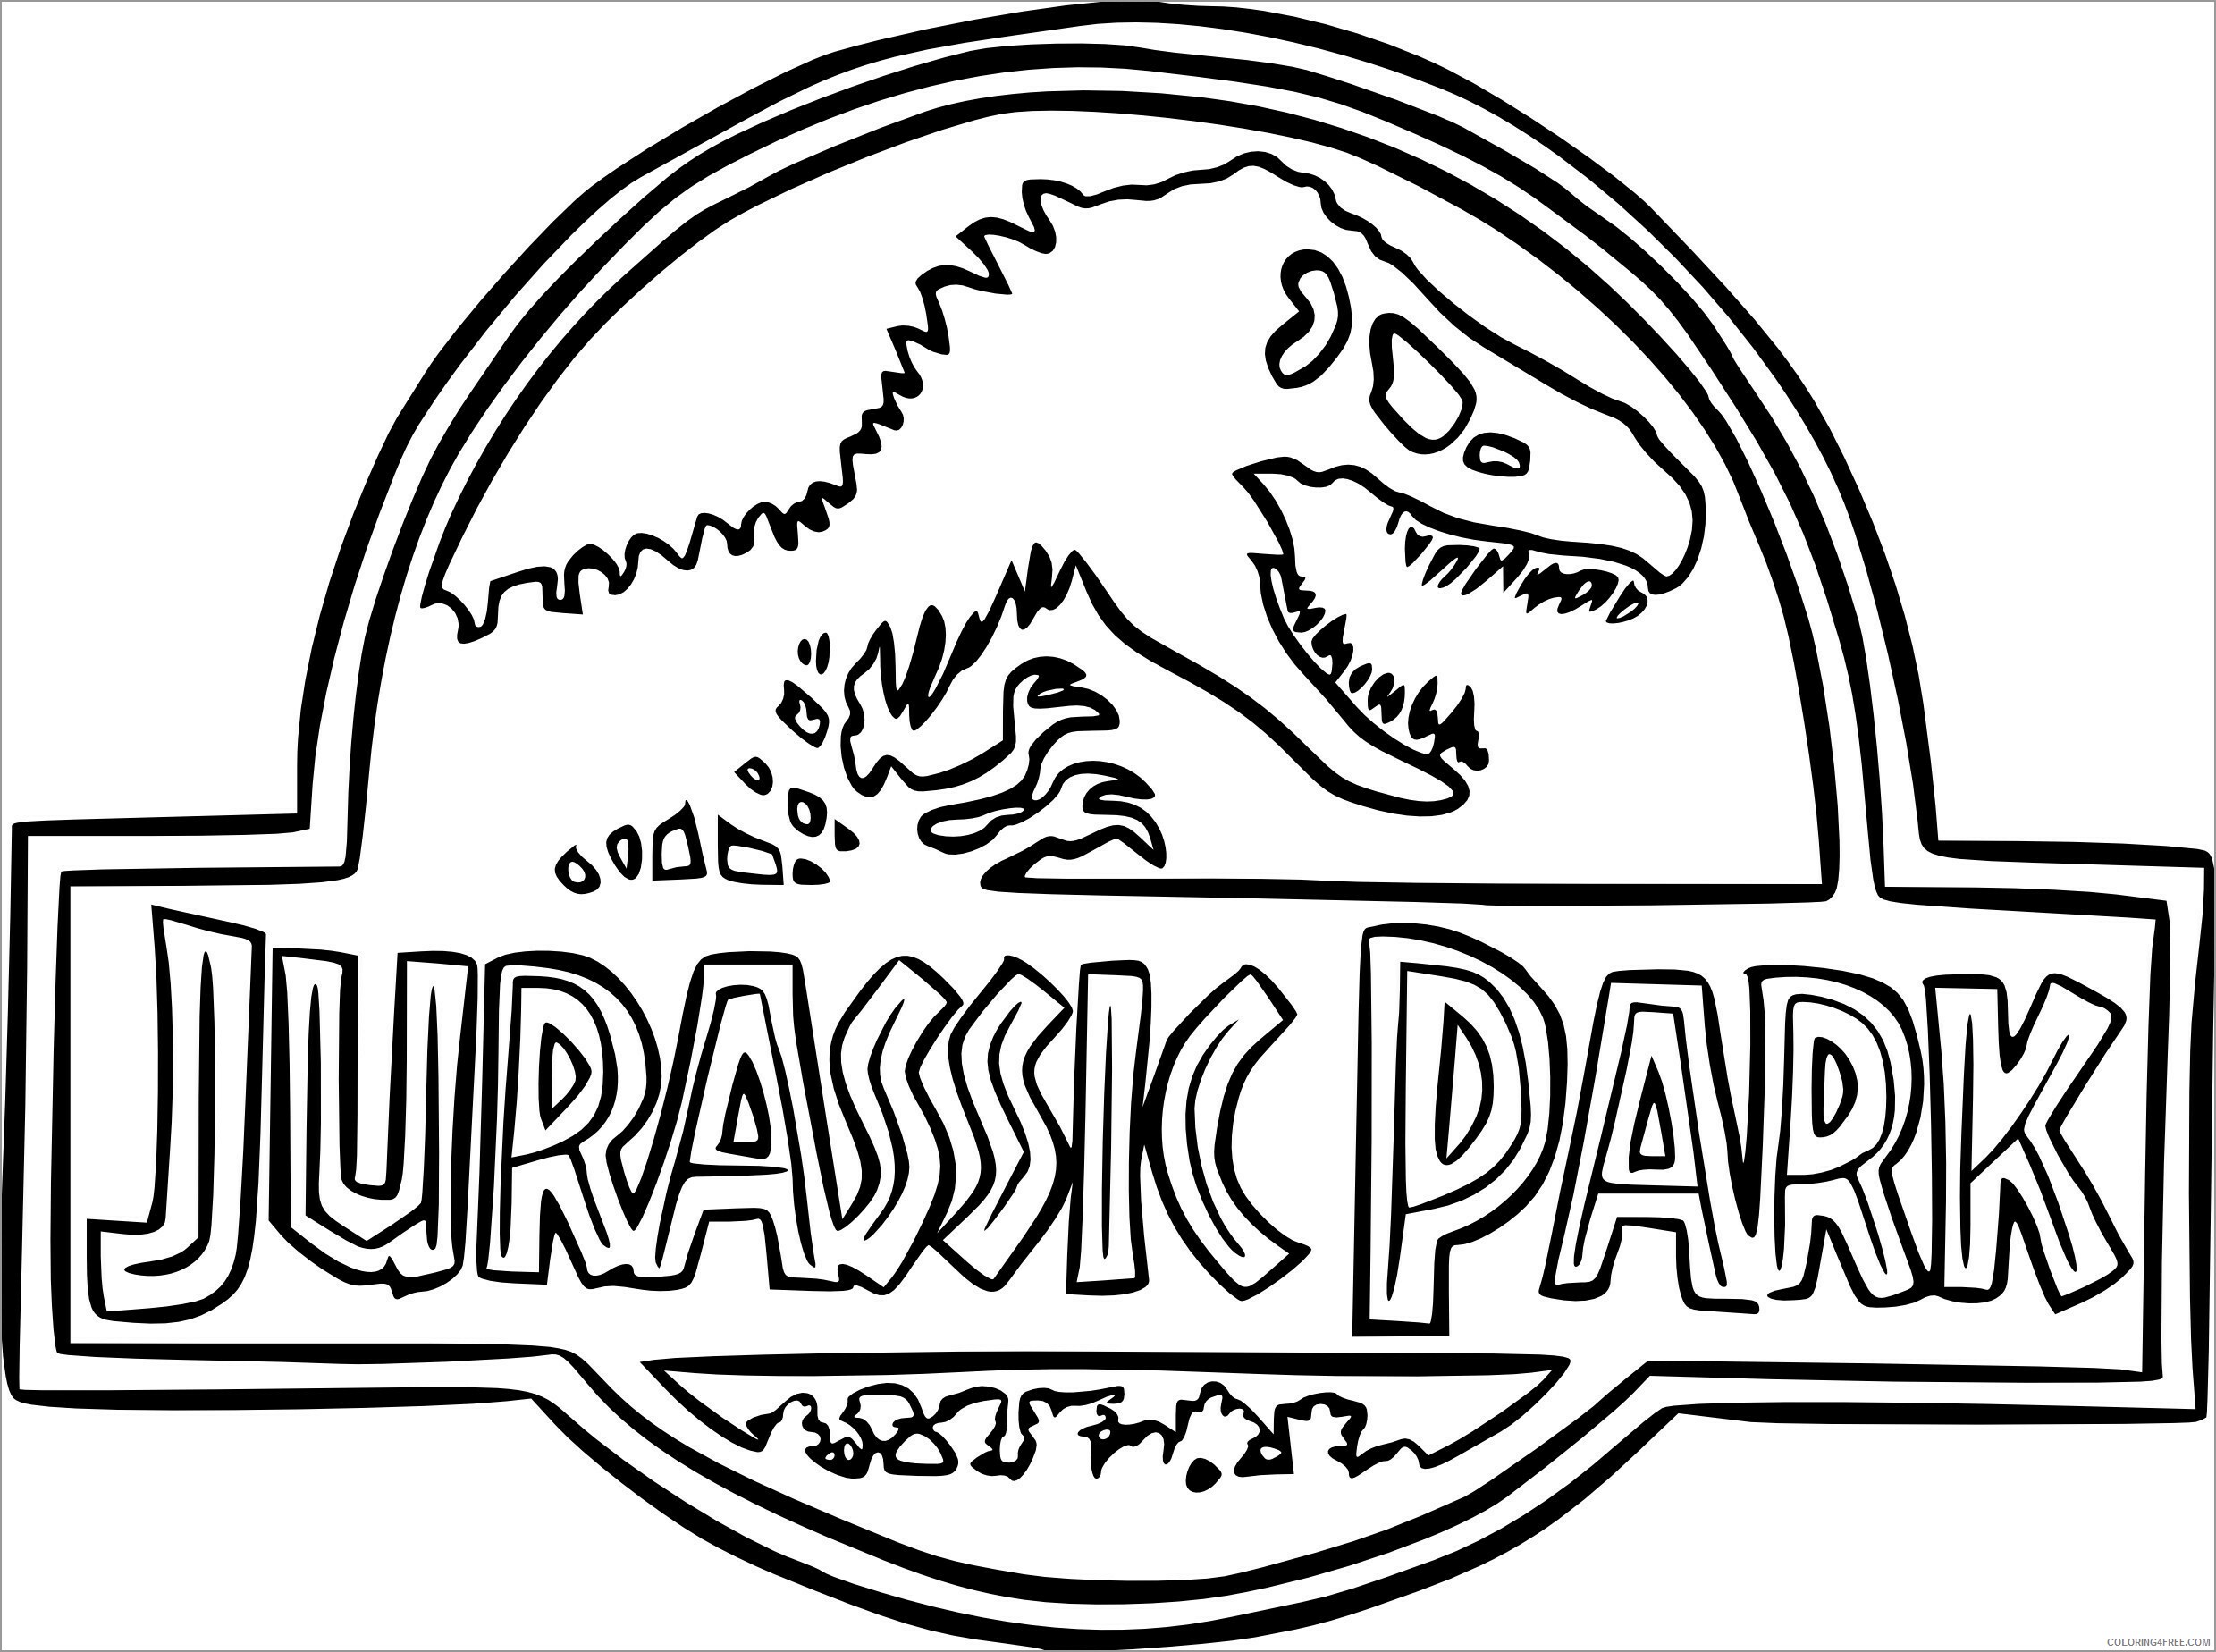 Dibujos De Logotipo De Jurassic Park Para Colorear Para Colorear Pdmrea ...